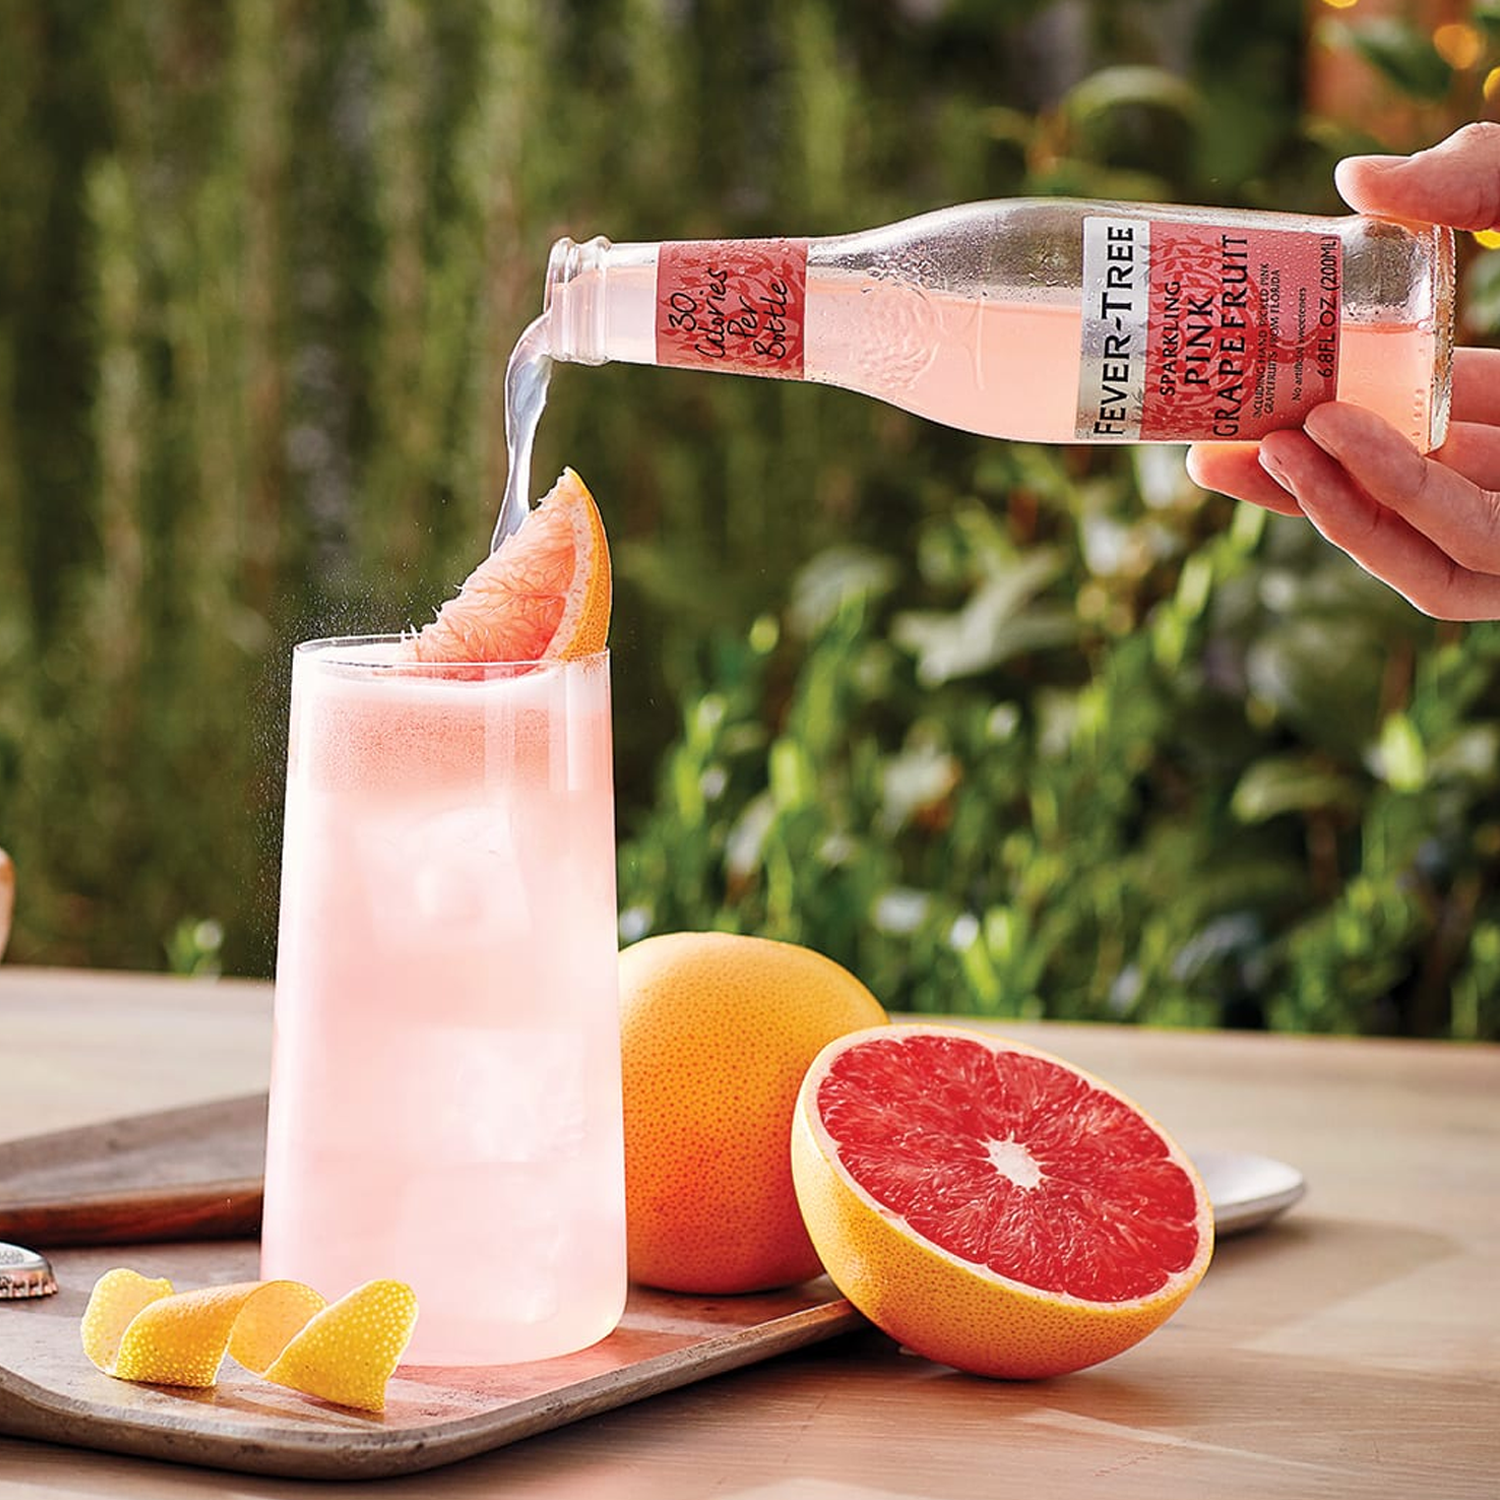 Fever Tree Sparkling Pink Grapefruit Soda - Premium Quality Mixer and Soda  - Refreshing Beverage for Cocktails & Mocktails 500ml Bottle - Pack of 5